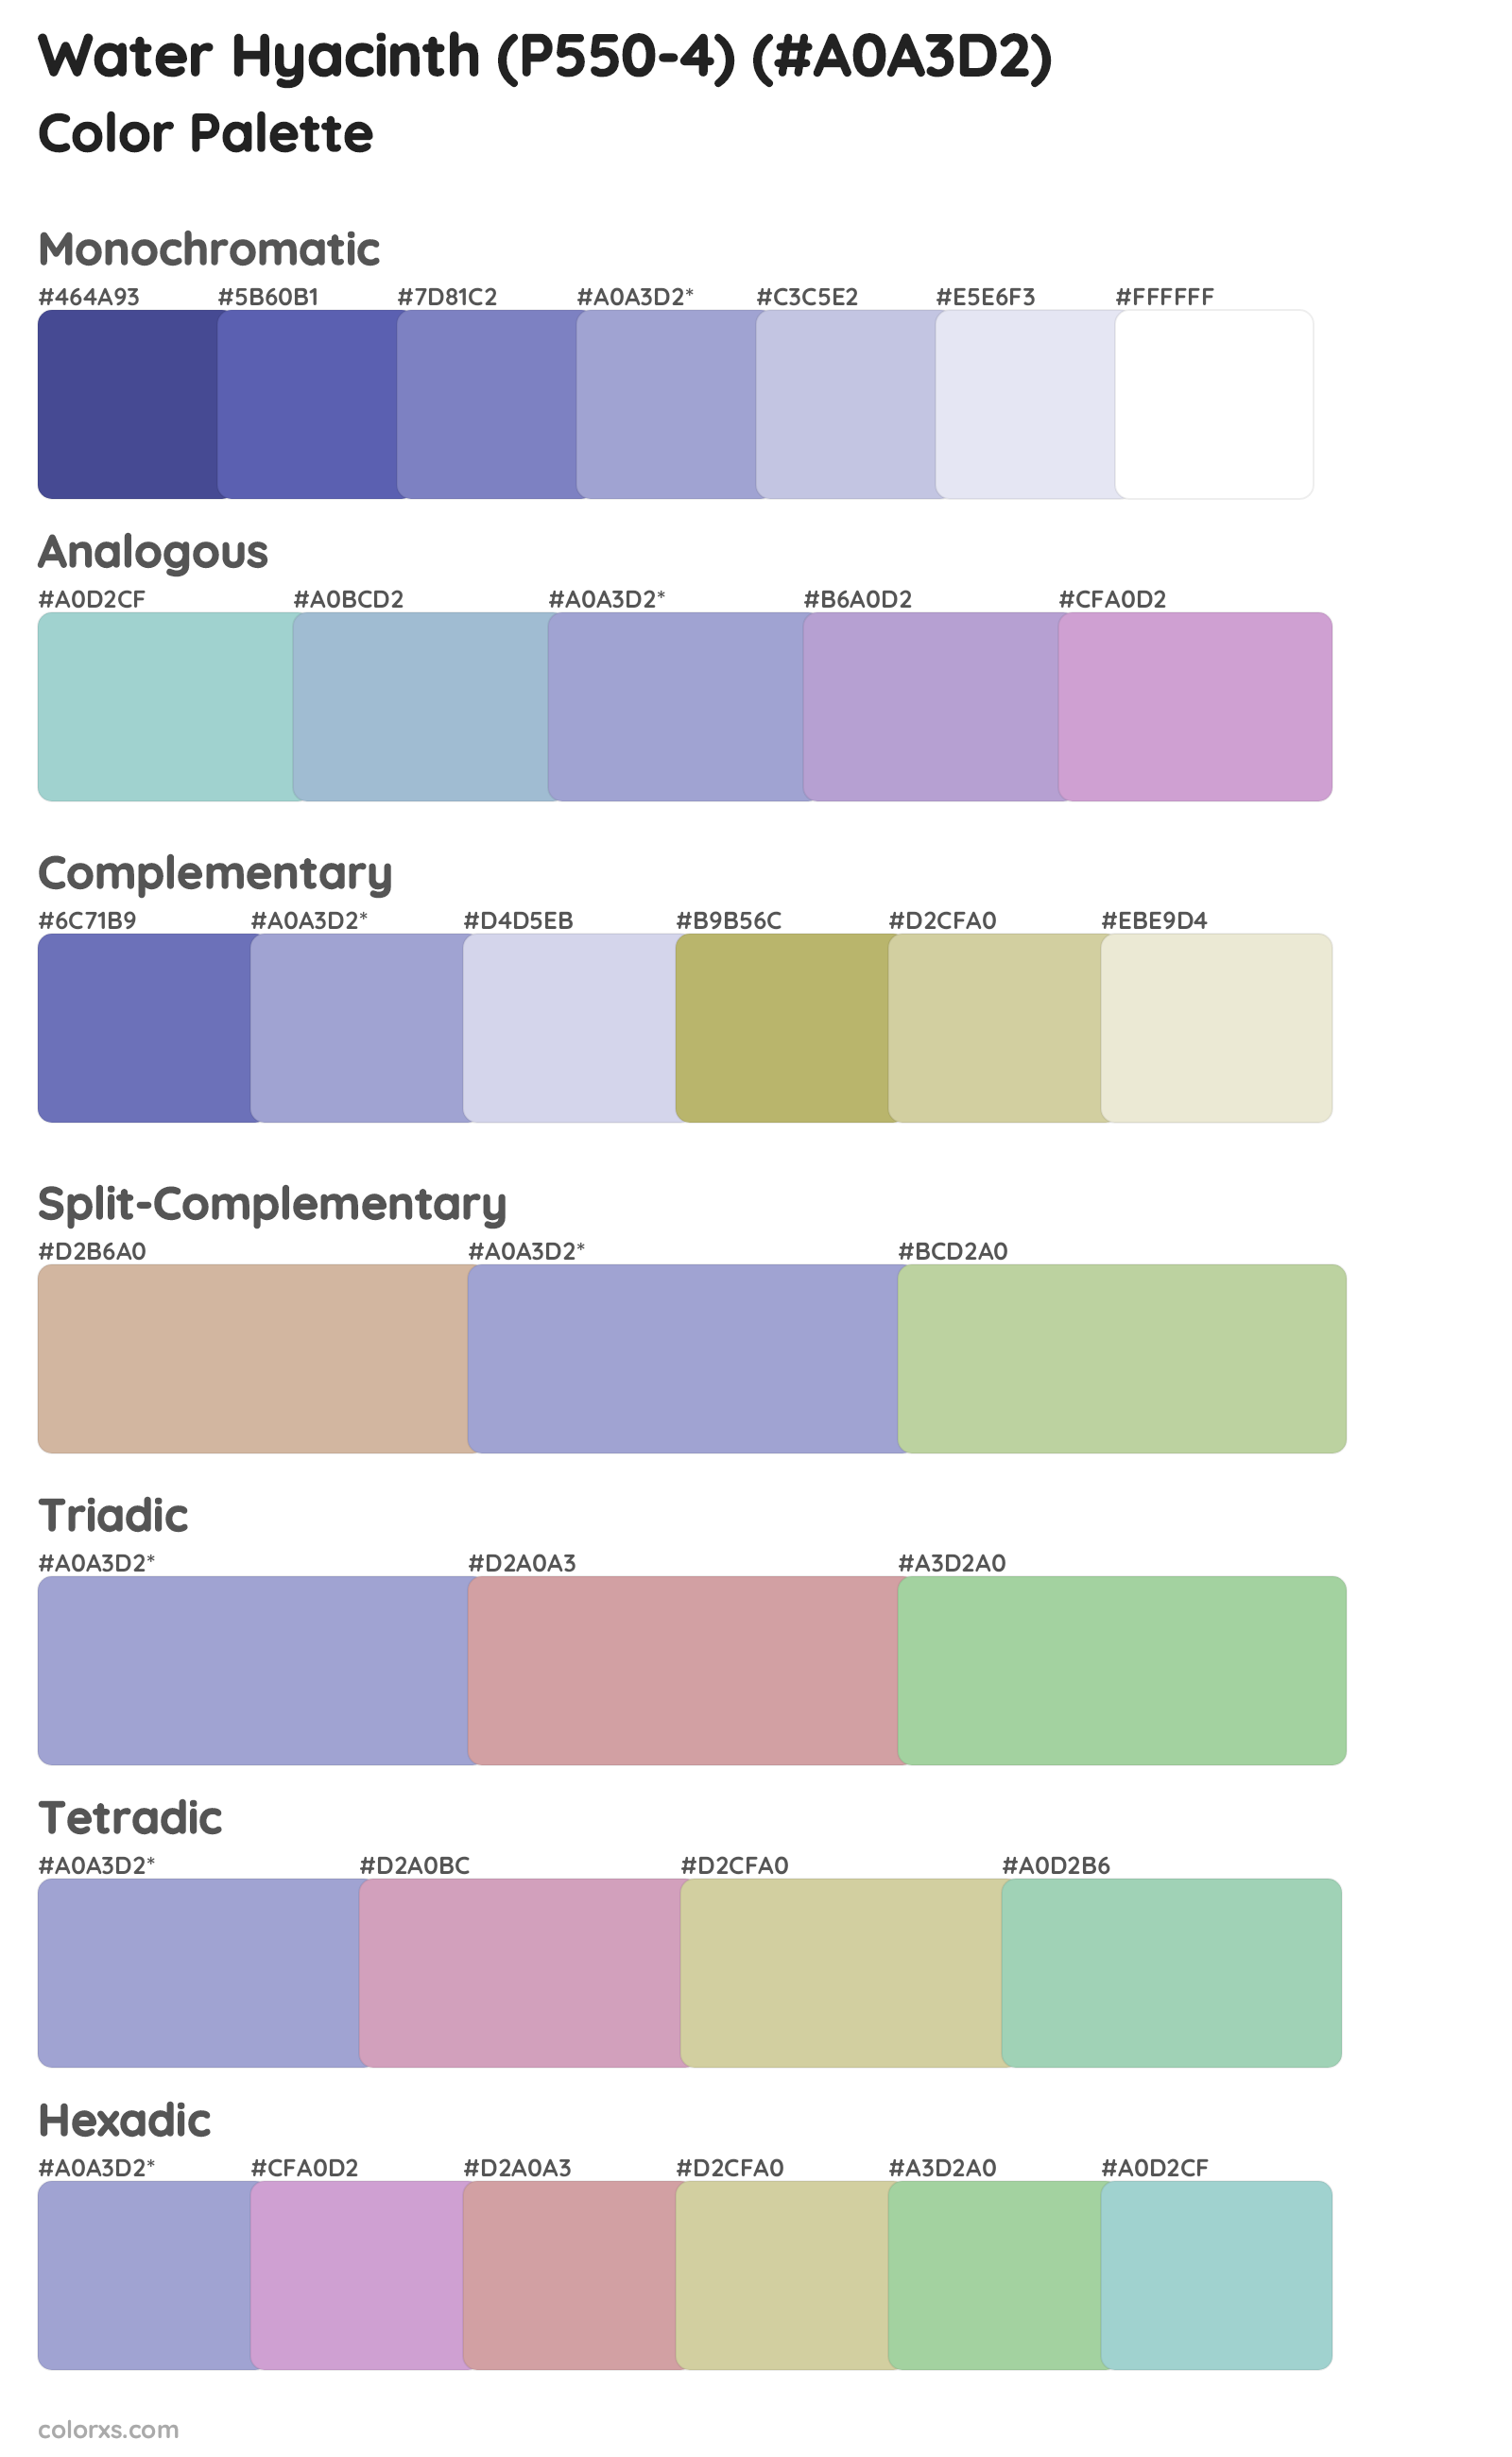 Water Hyacinth (P550-4) Color Scheme Palettes